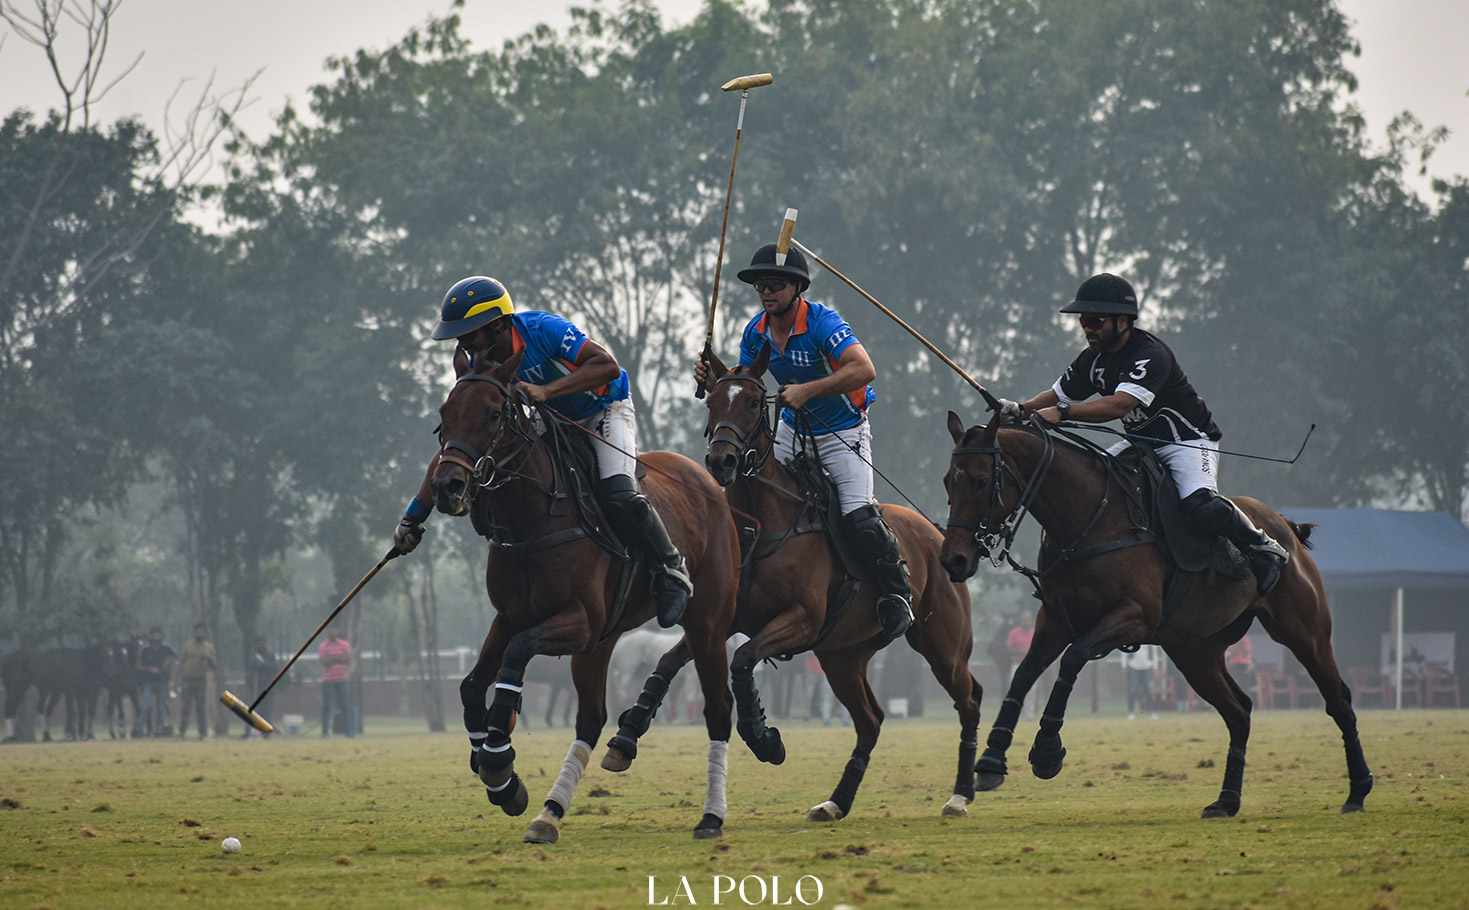 polo-shots-players-on-ground-horses-polo-ponies-delhi-season-lapolo